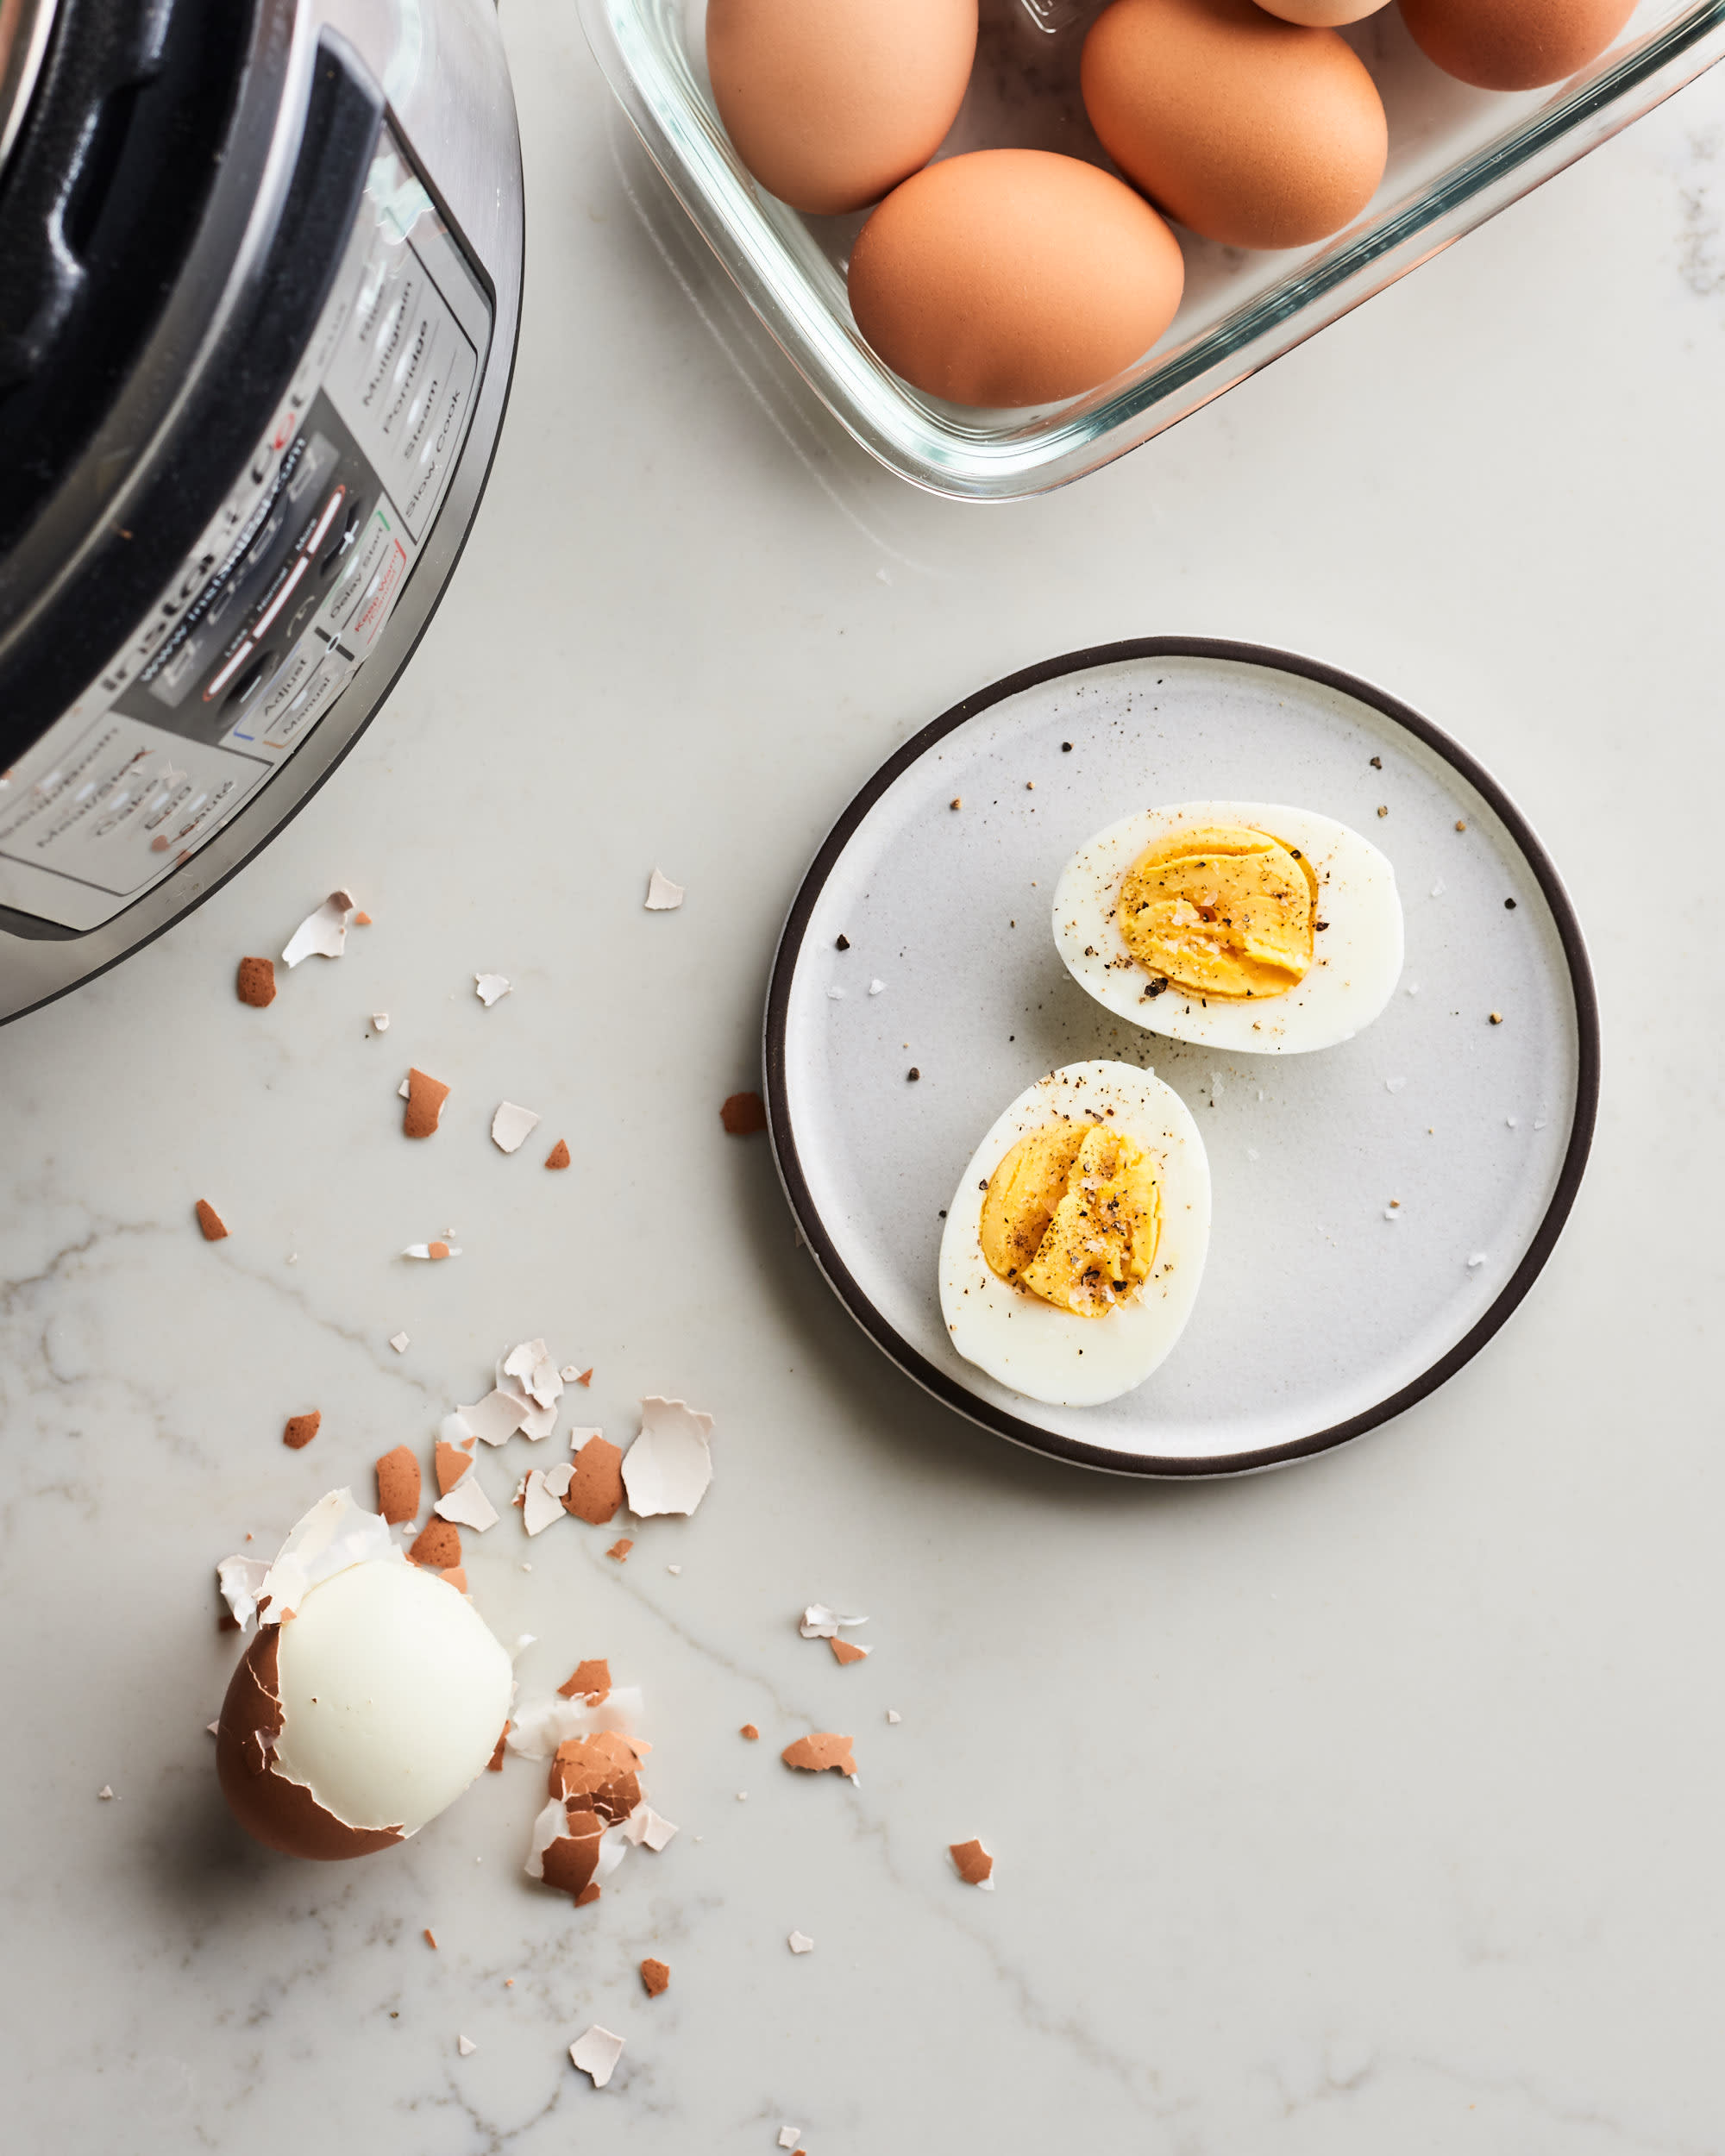 https://cdn.apartmenttherapy.info/image/upload/v1579293955/k/Photo/Recipes/2020-01-Hot-To-Instant-Pot-Hard-Boiled-Eggs/How-to-Make-the-Best-Instant-Pot-Hard-Boiled-Eggs_038.jpg